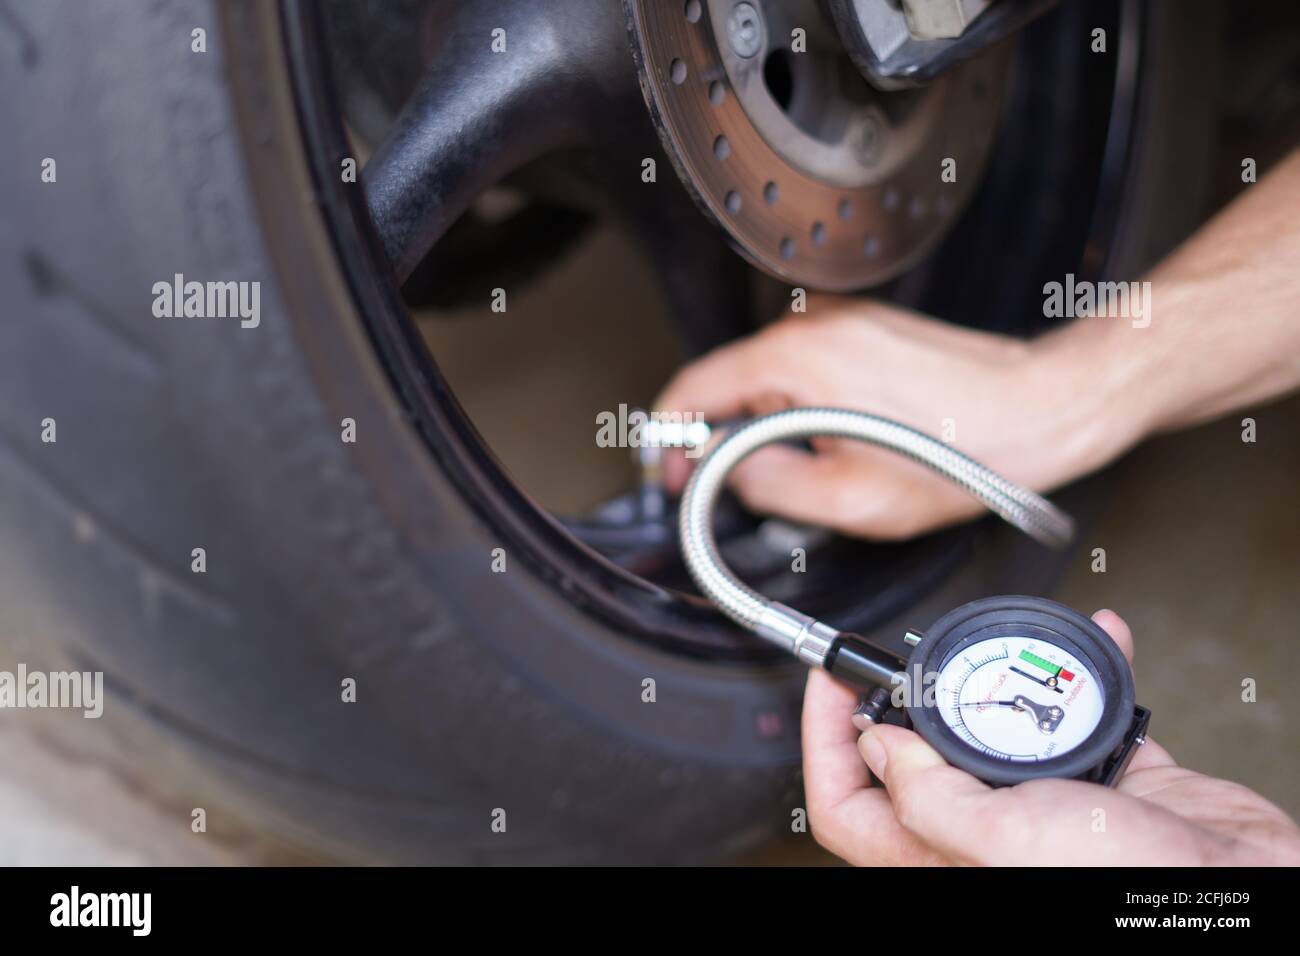 Man checking manually air pressure of motorcycle wheel before traveling Stock Photo